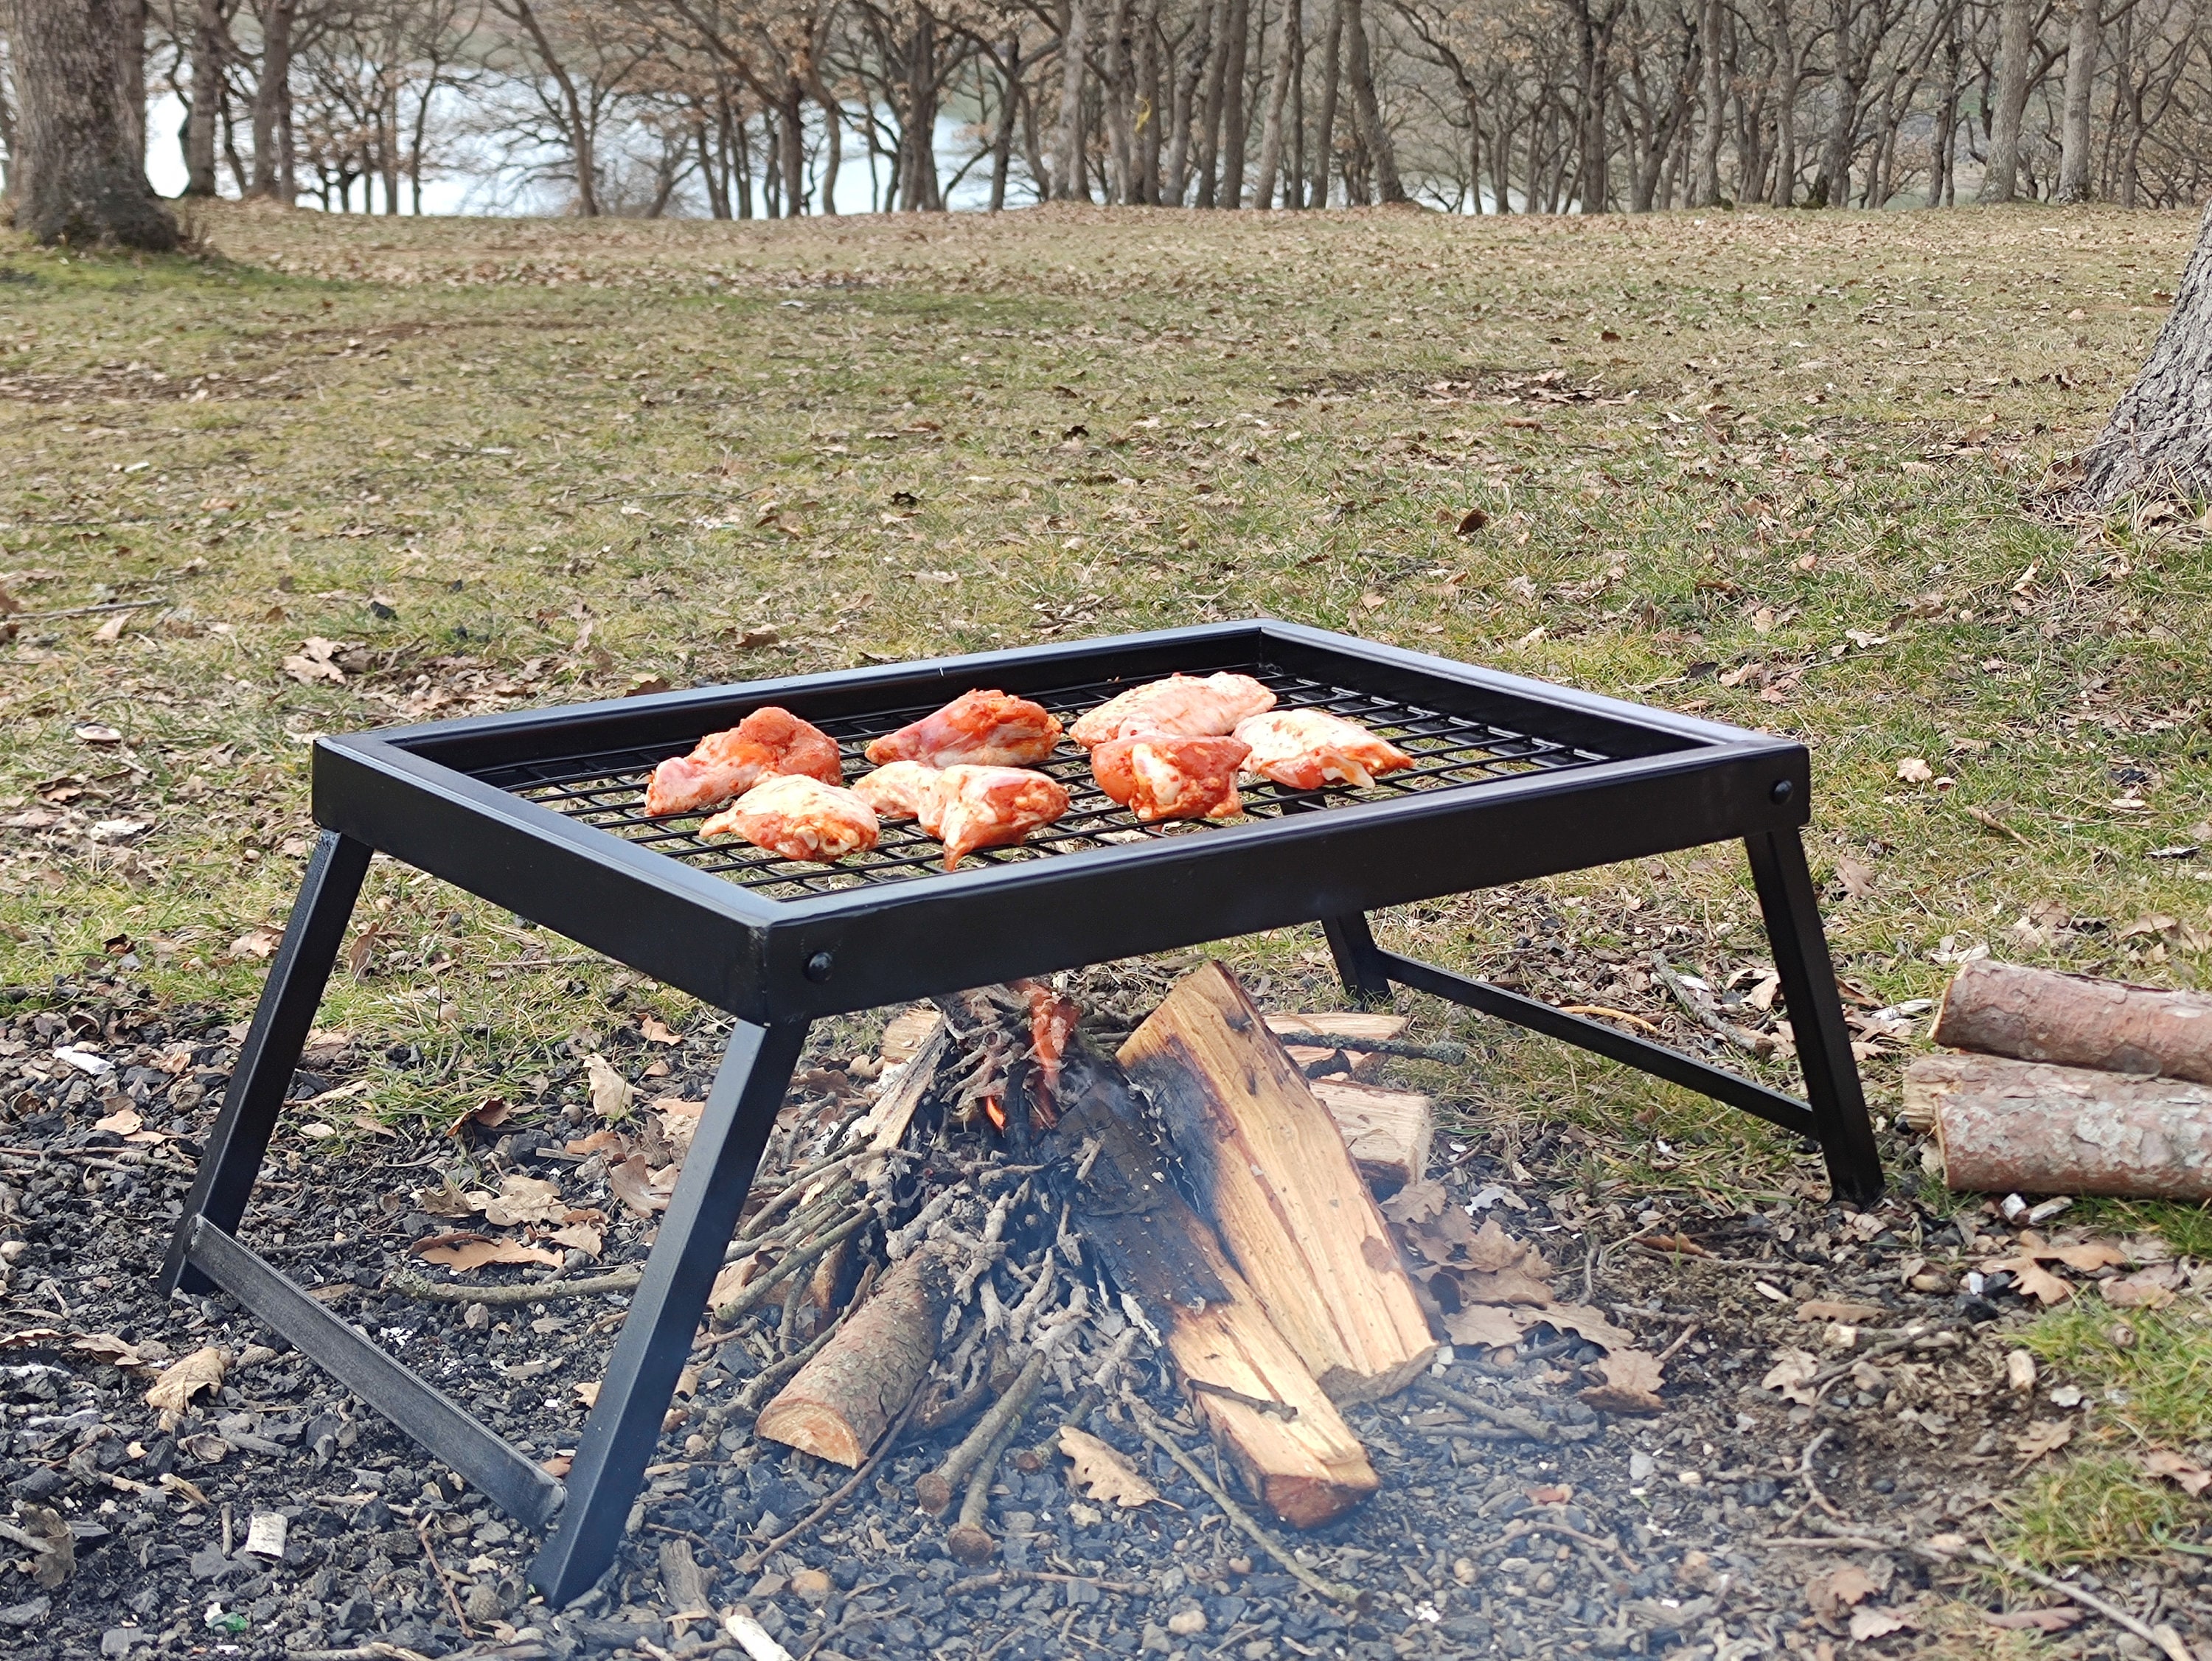 25cm Cast Iron Dutch Oven Camping Pot Set Outdoor Portable Multi